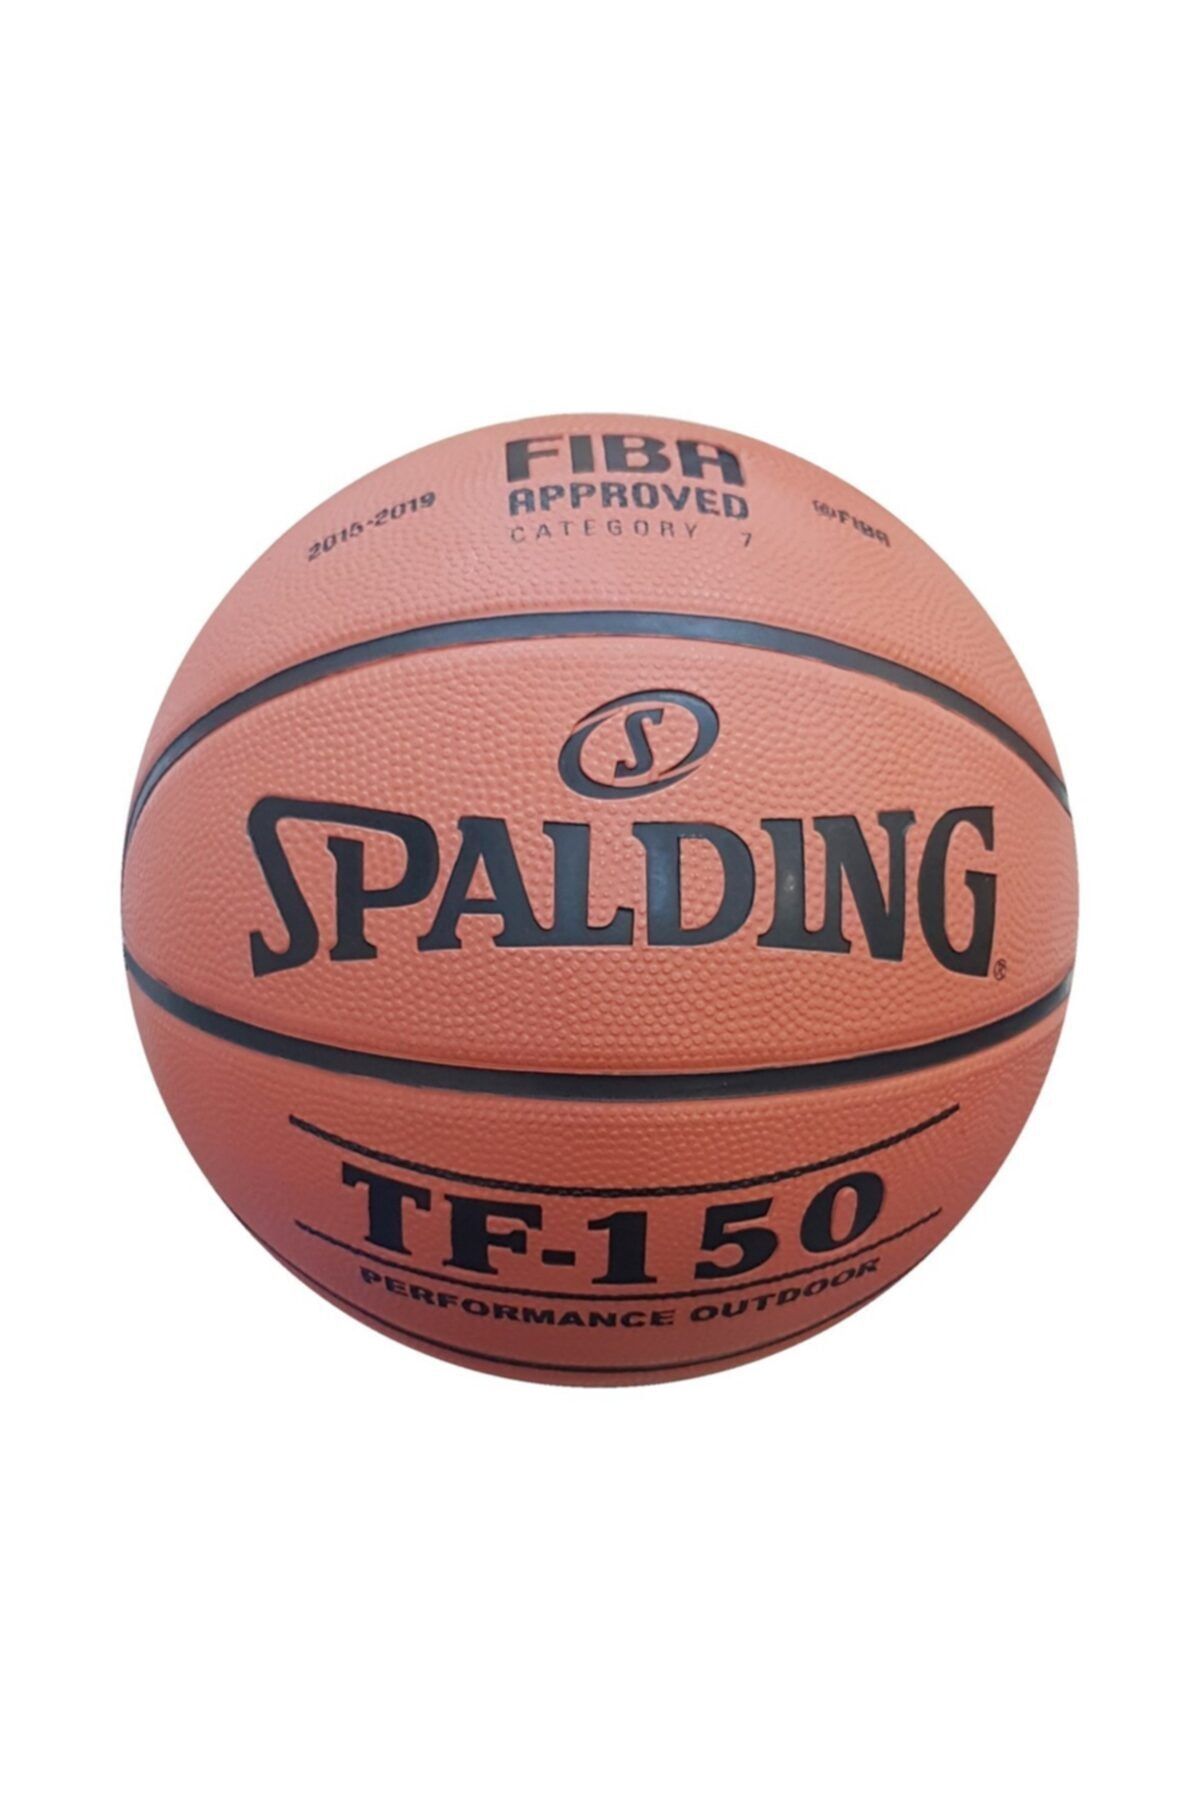 Spalding Tf-150 Basketbol Topu Perform Size 5 Fıba Logolu